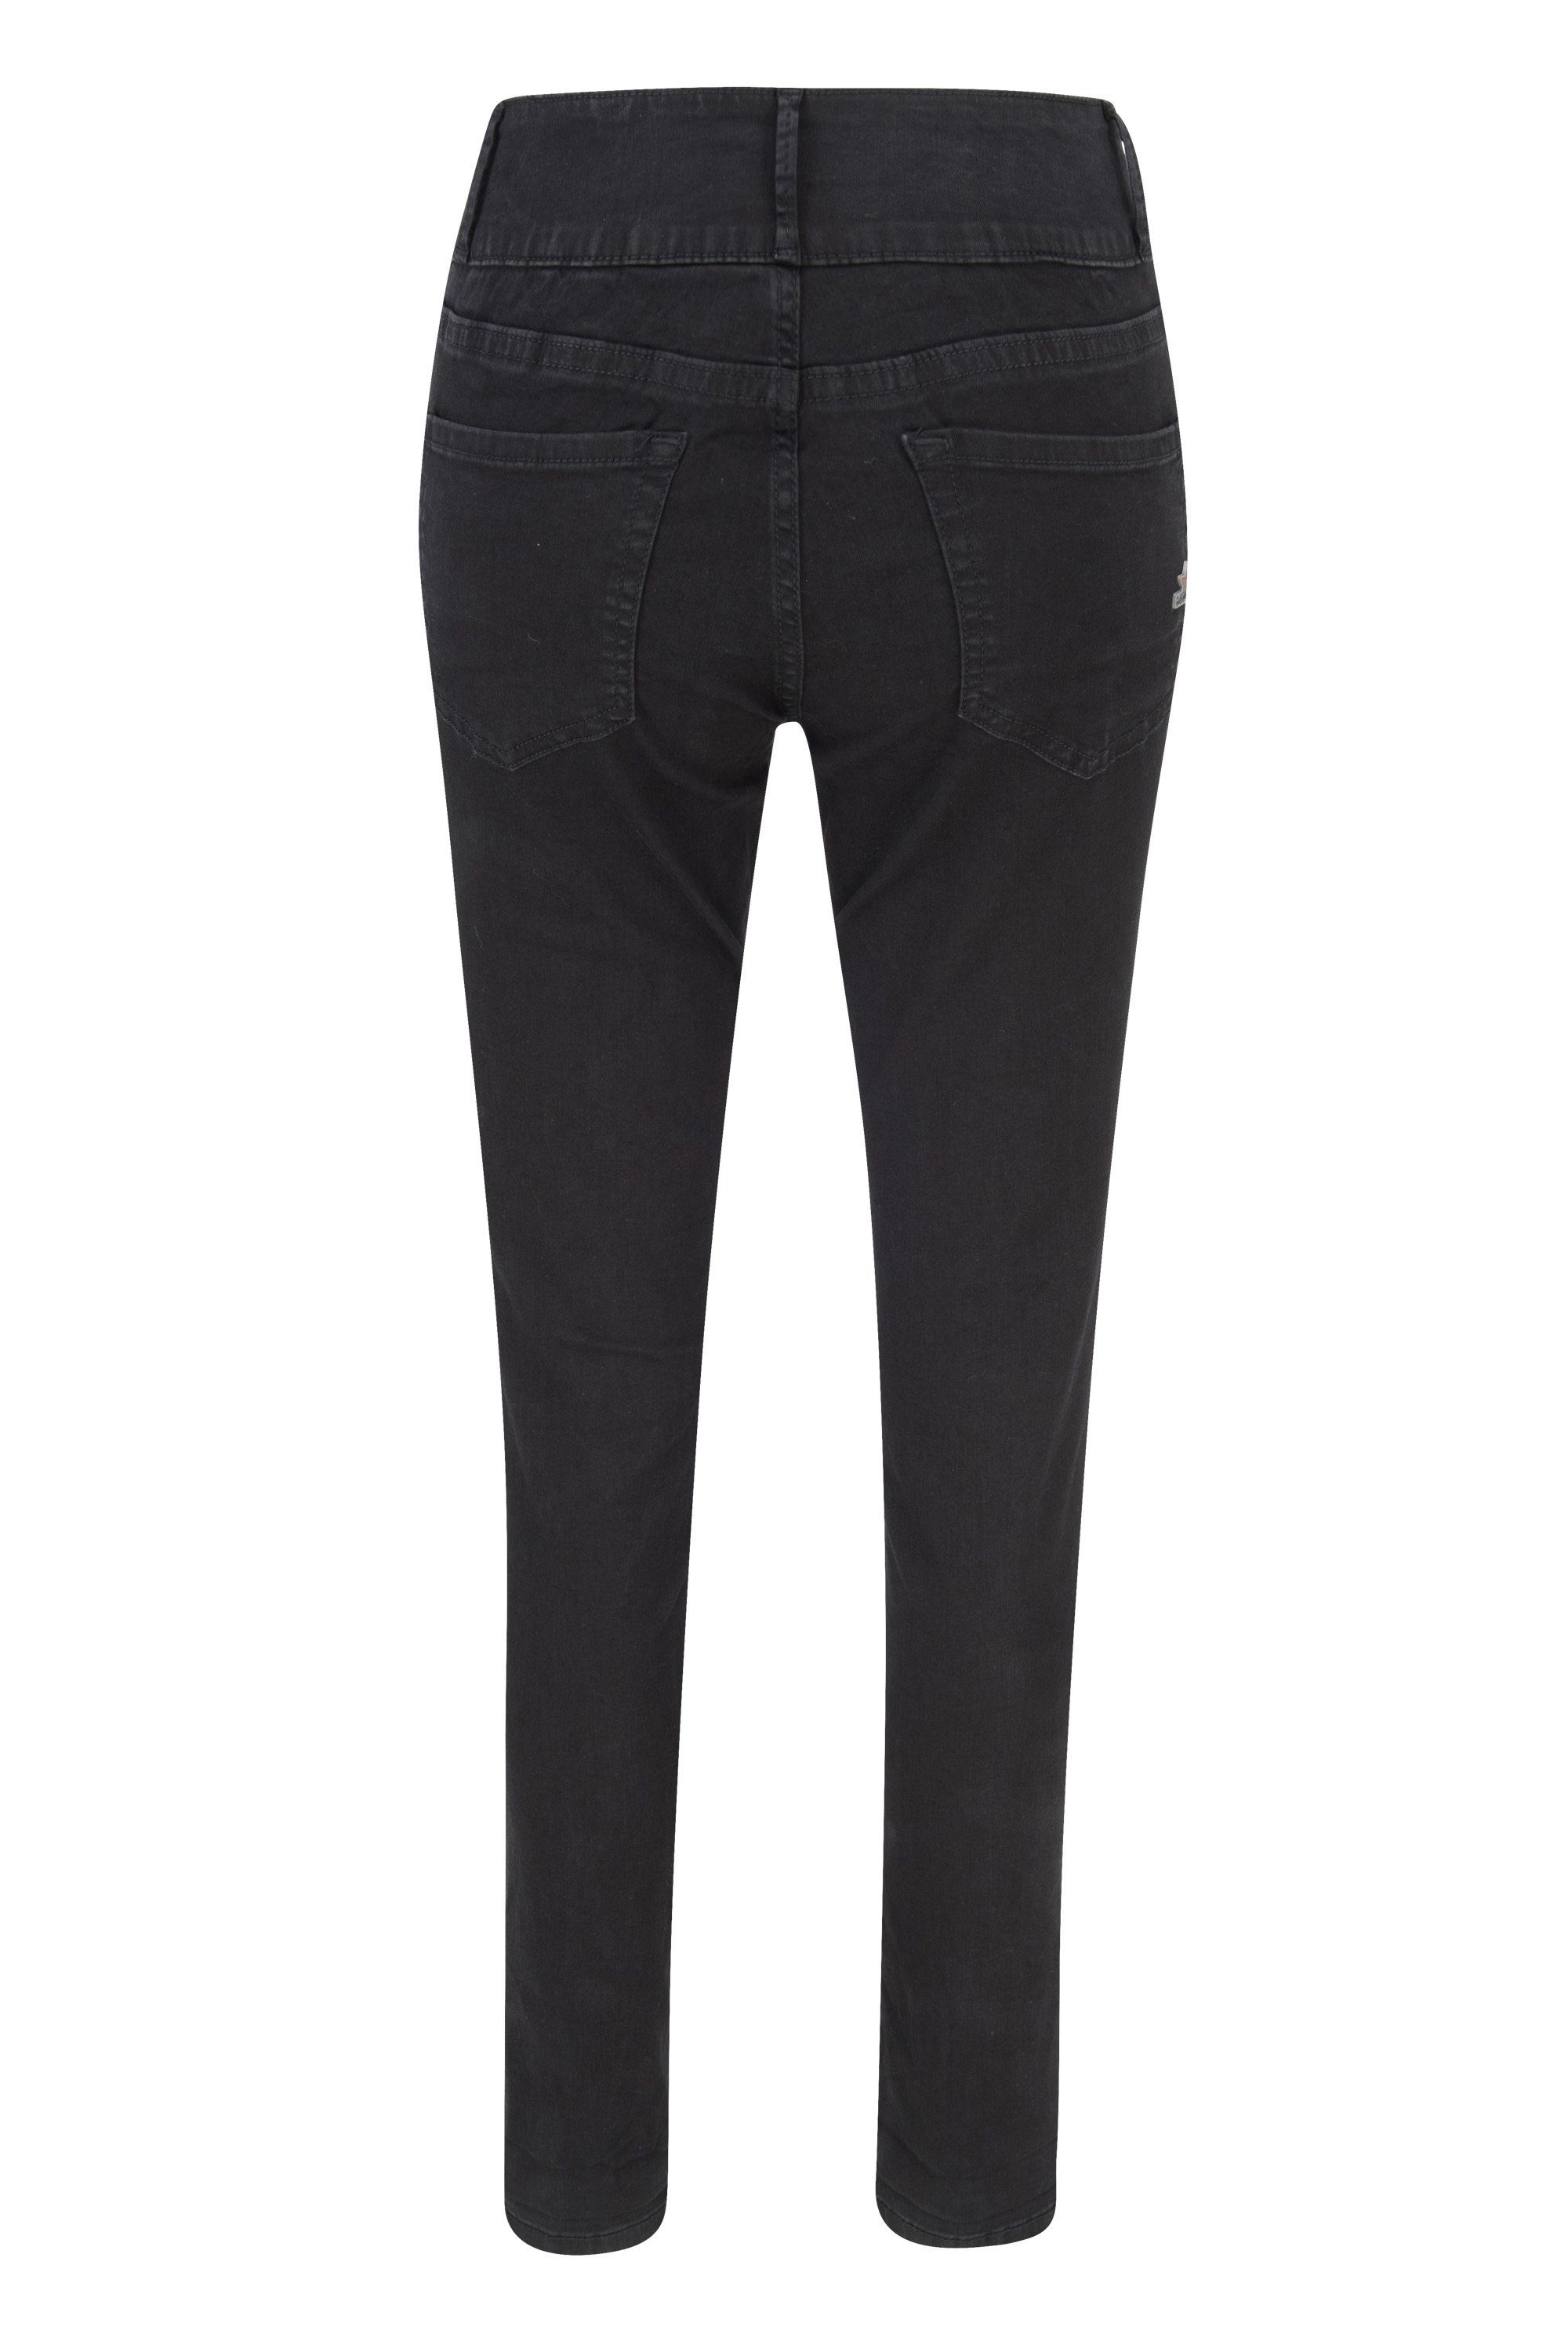 Buena Stretch Twill, 5-Pocket-Jeans black Tummyless Vista